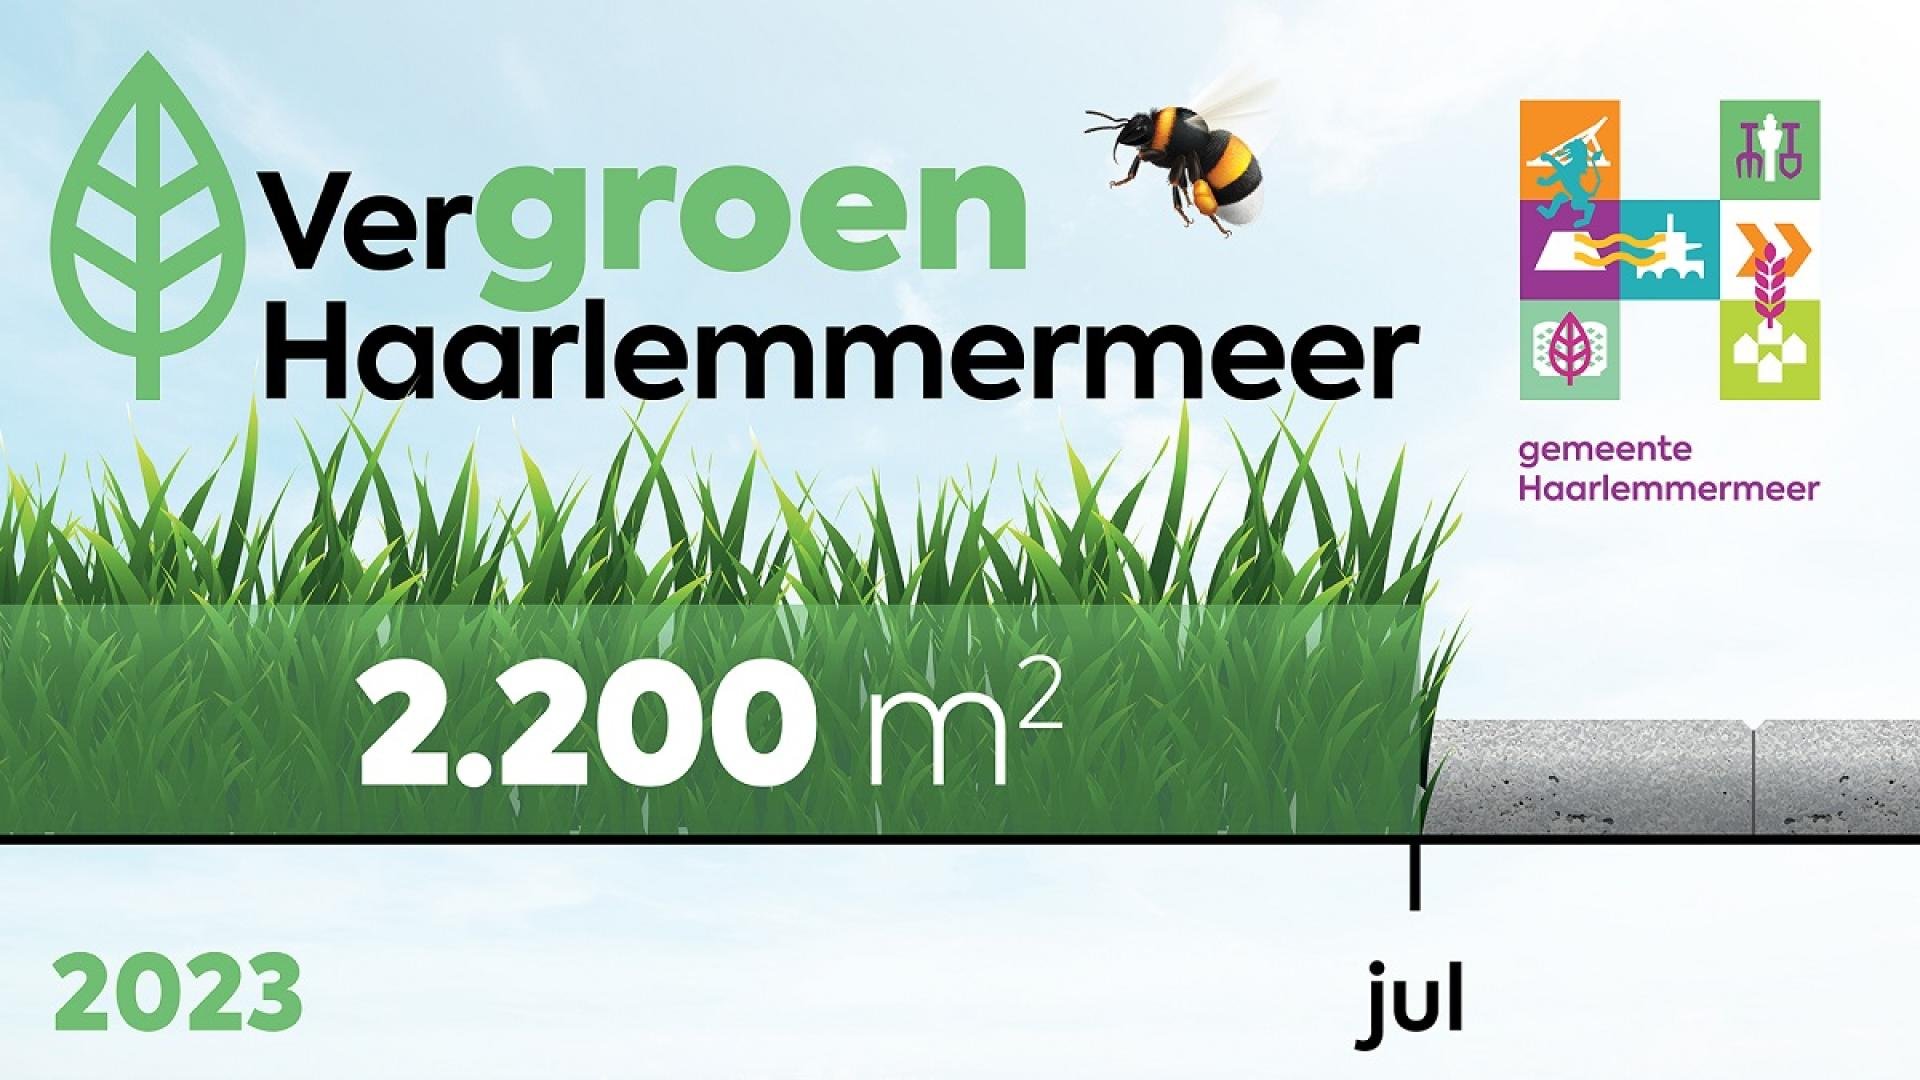 De Haarlemmermeerse vergroenmeter staat op 2200 m2